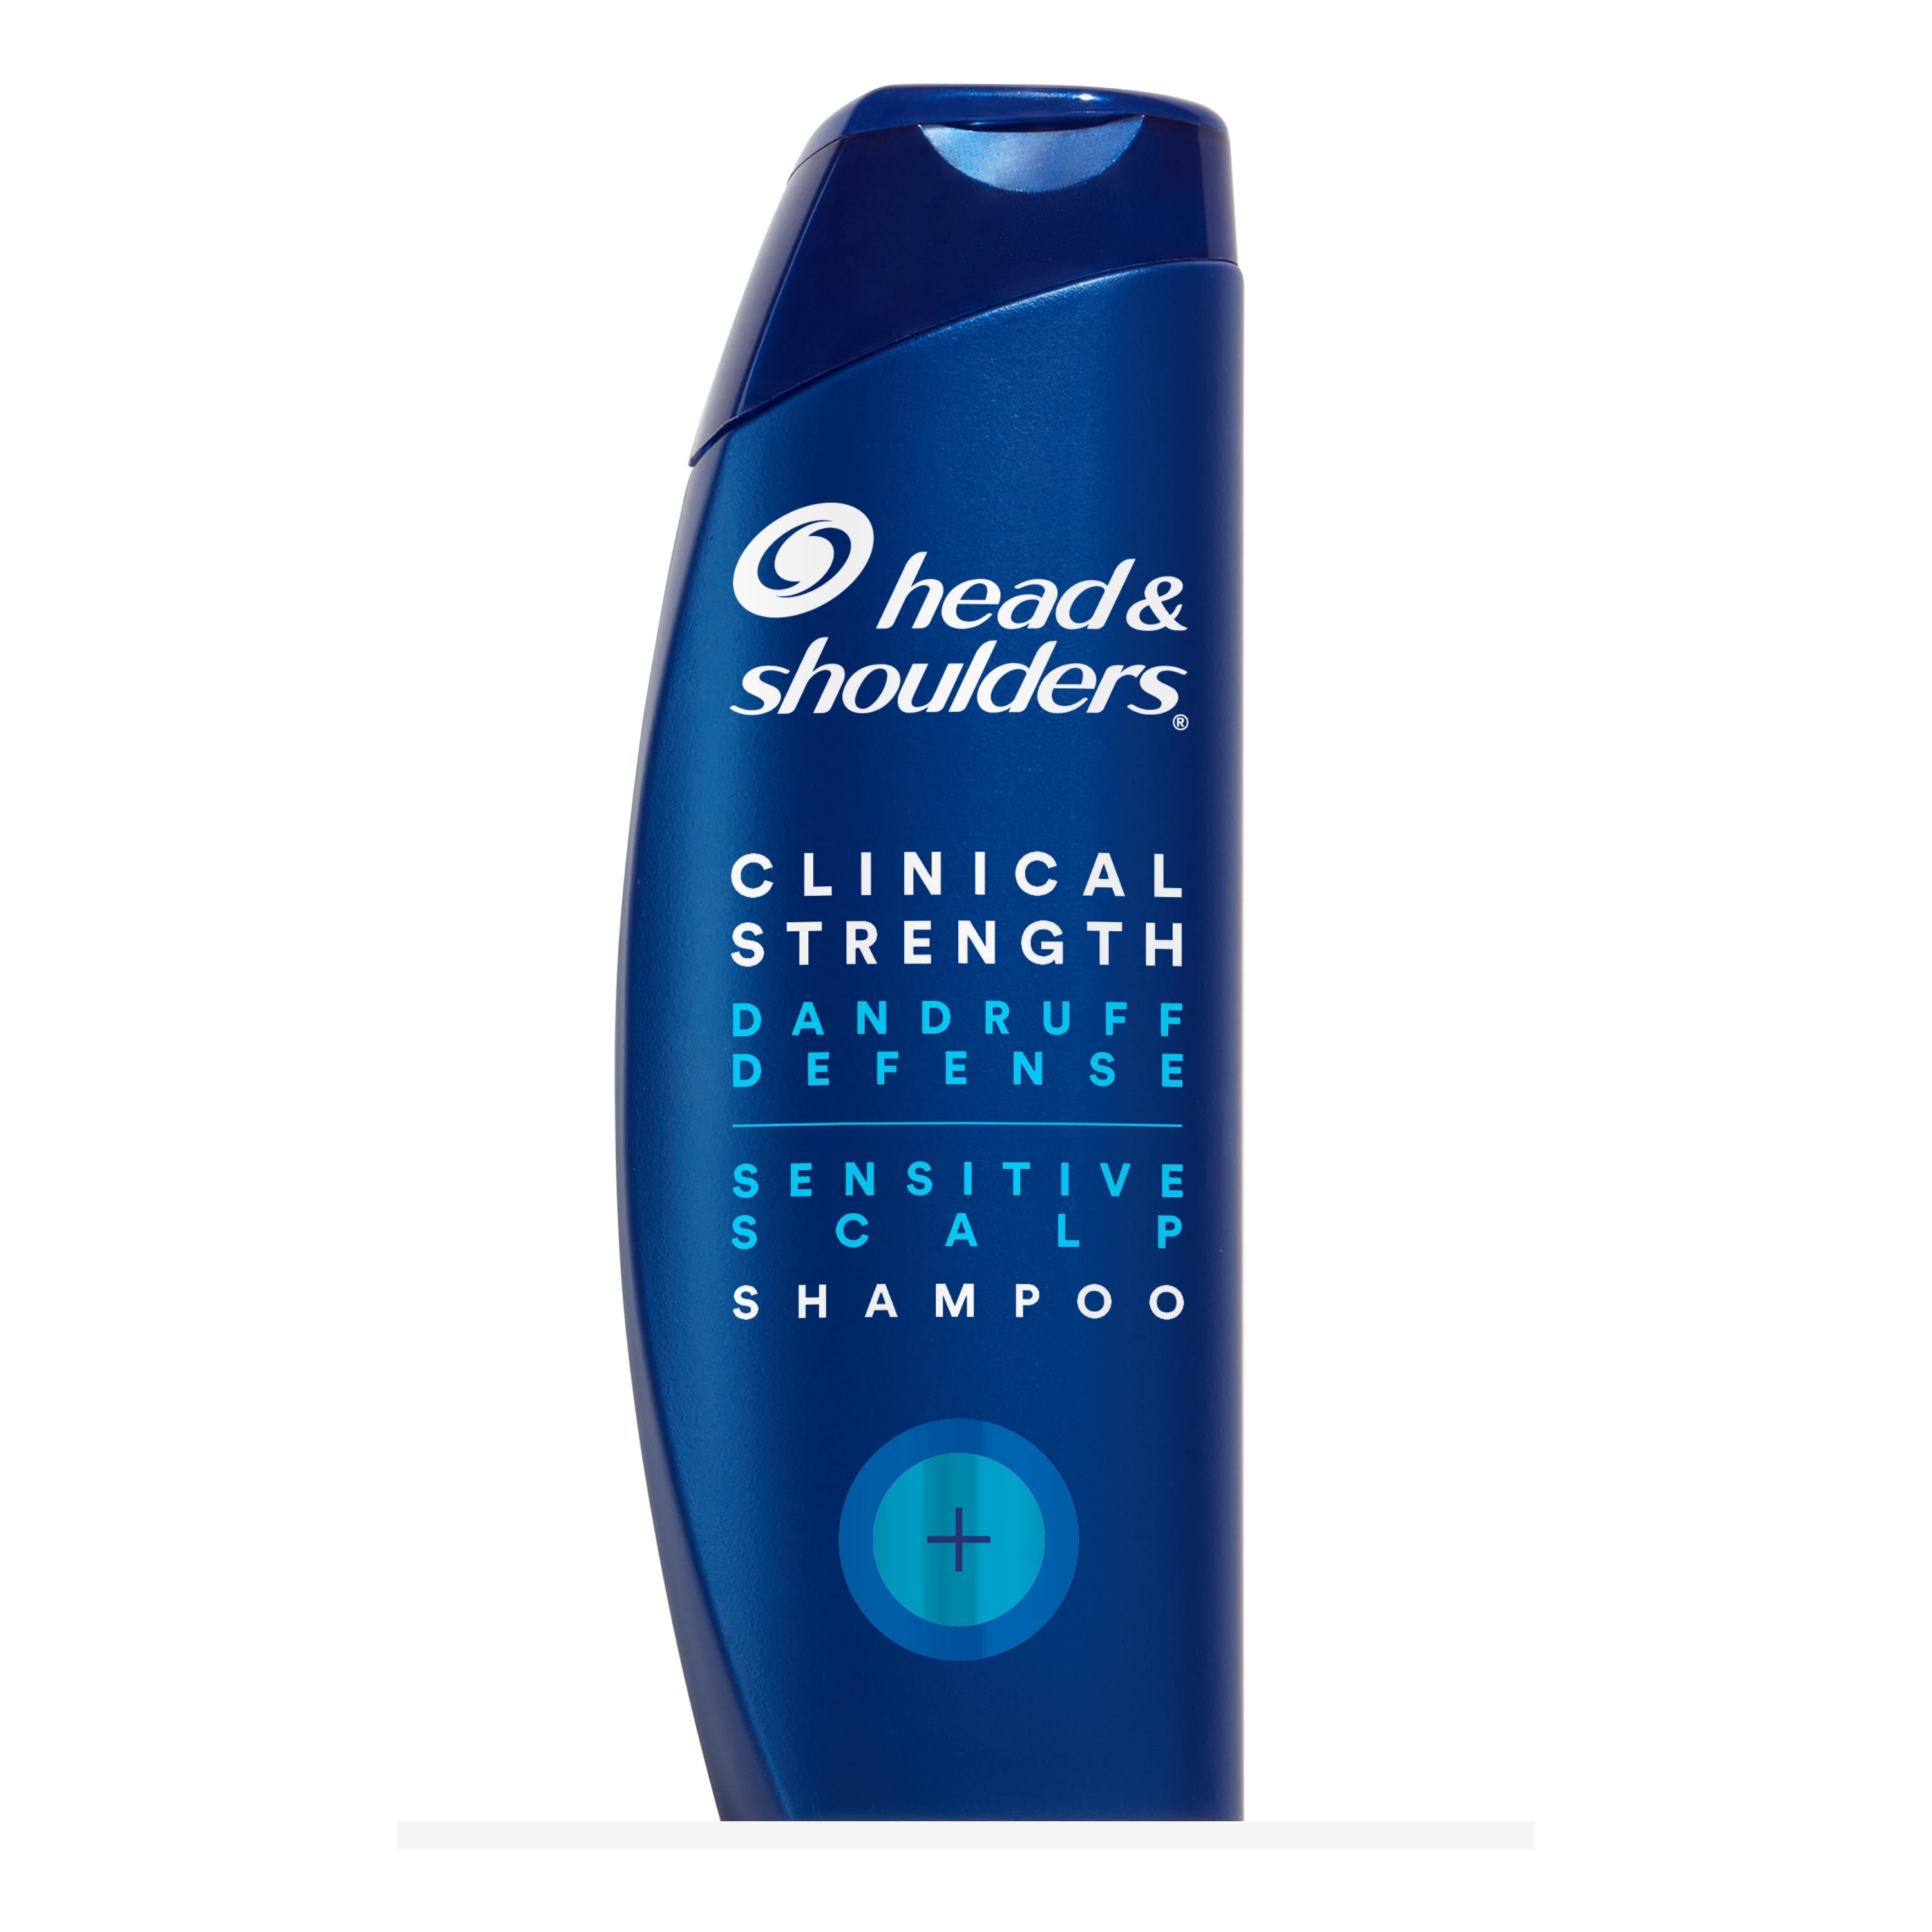 Head & Shoulders Clinical Dandruff Defense Sensitive Shampoo 13.5oz